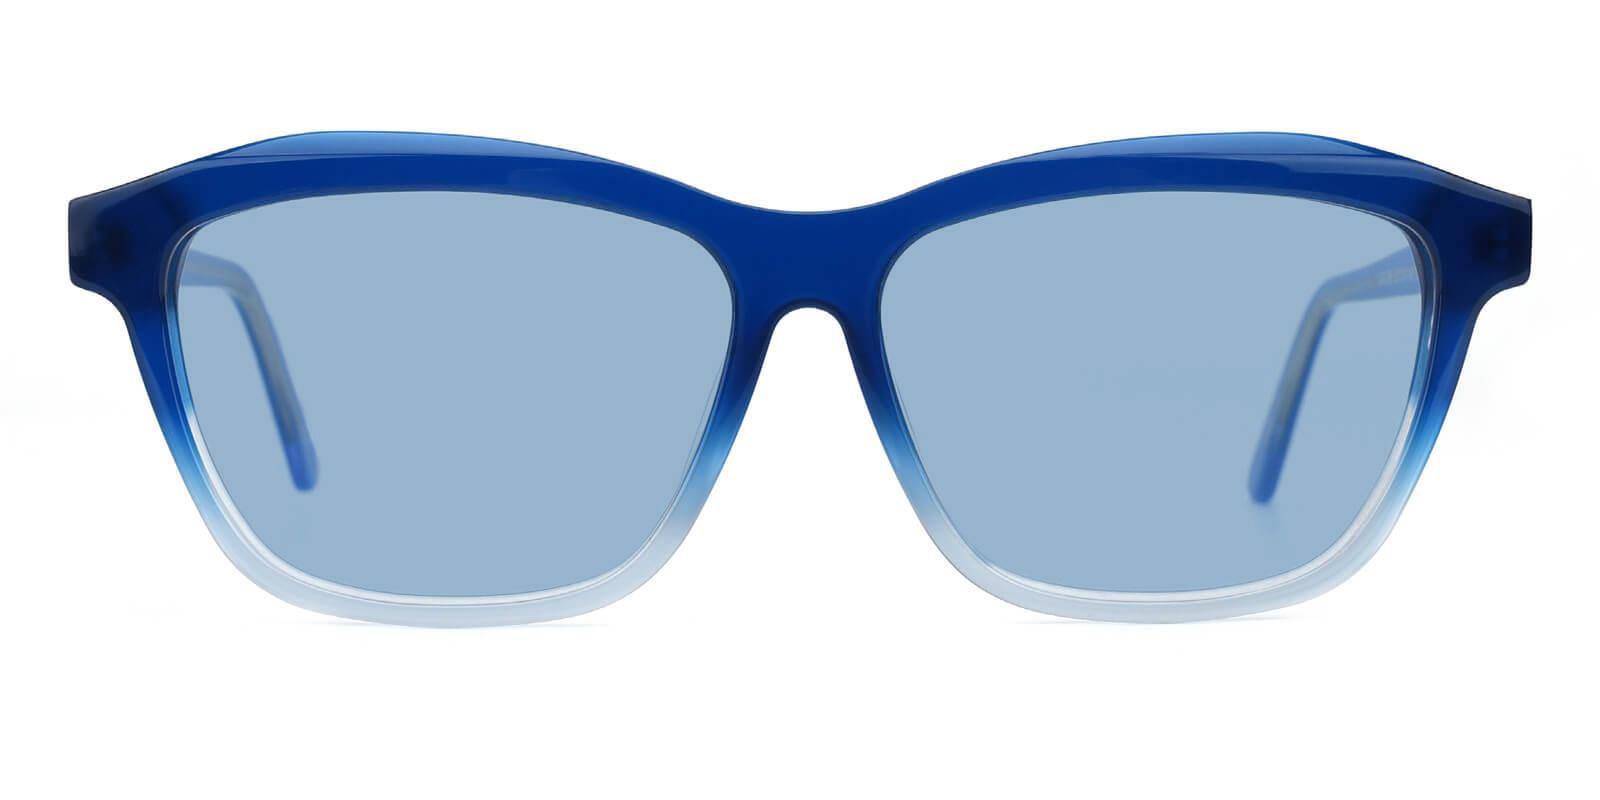 Morning Blue Acetate SpringHinges , Sunglasses , UniversalBridgeFit Frames from ABBE Glasses